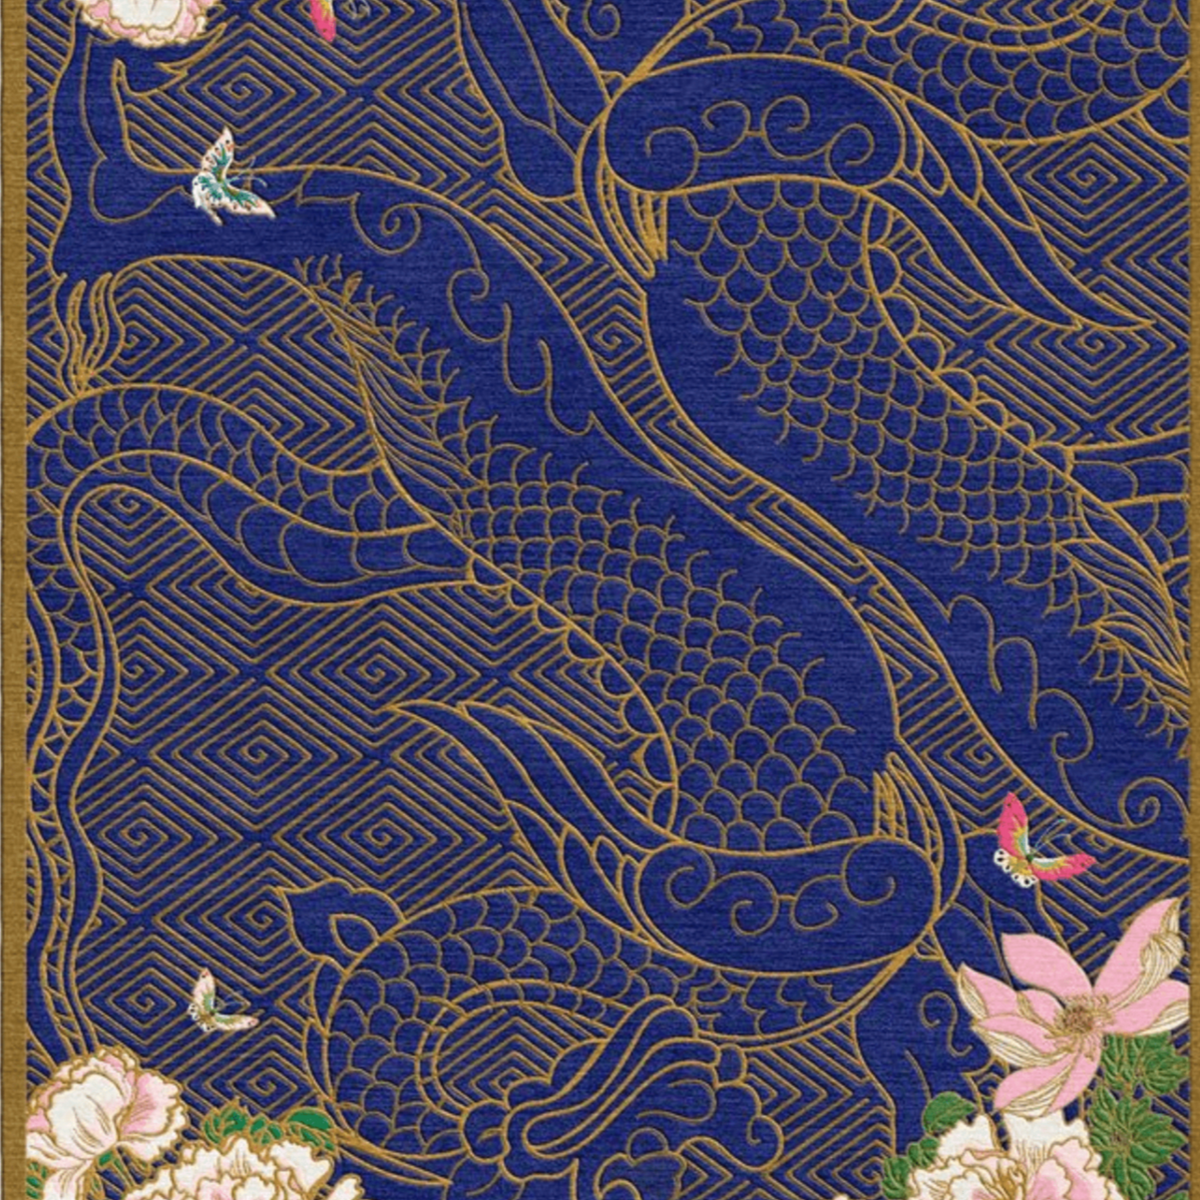 Dragon Florals Blue & Gold Hand Tufted Rug PRE ORDER